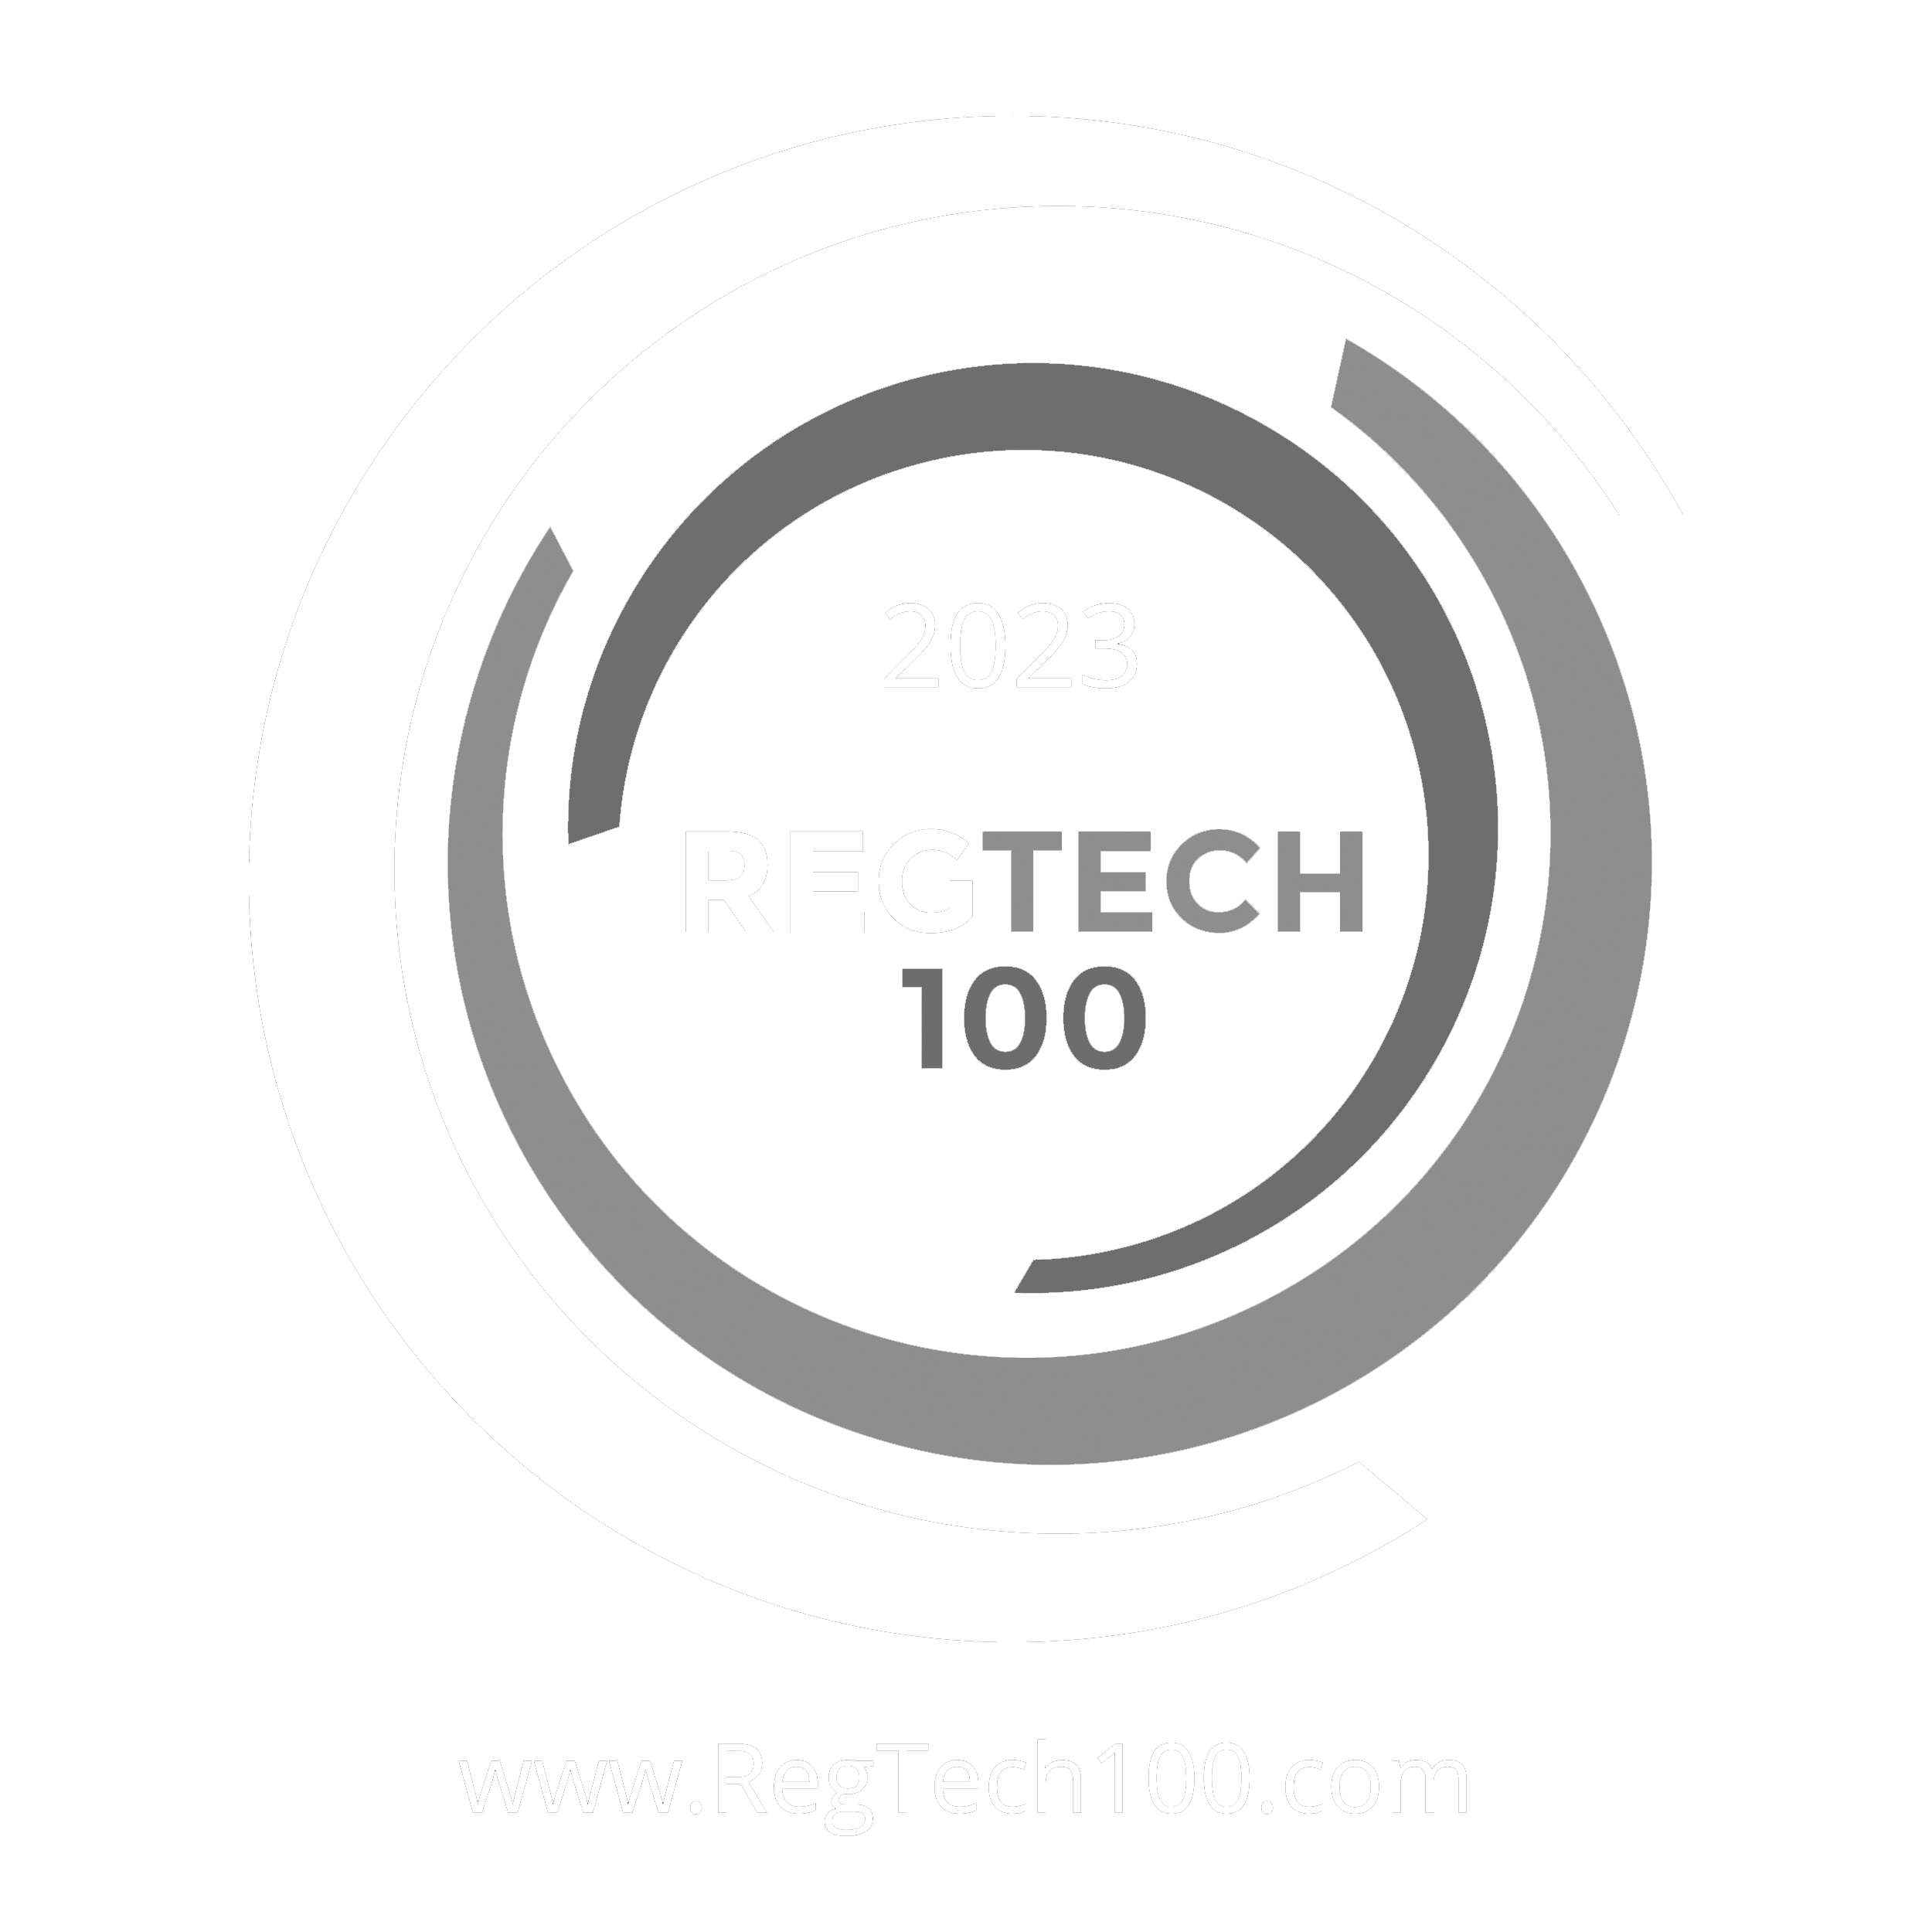 RegTech 100 2023 accreditation logo